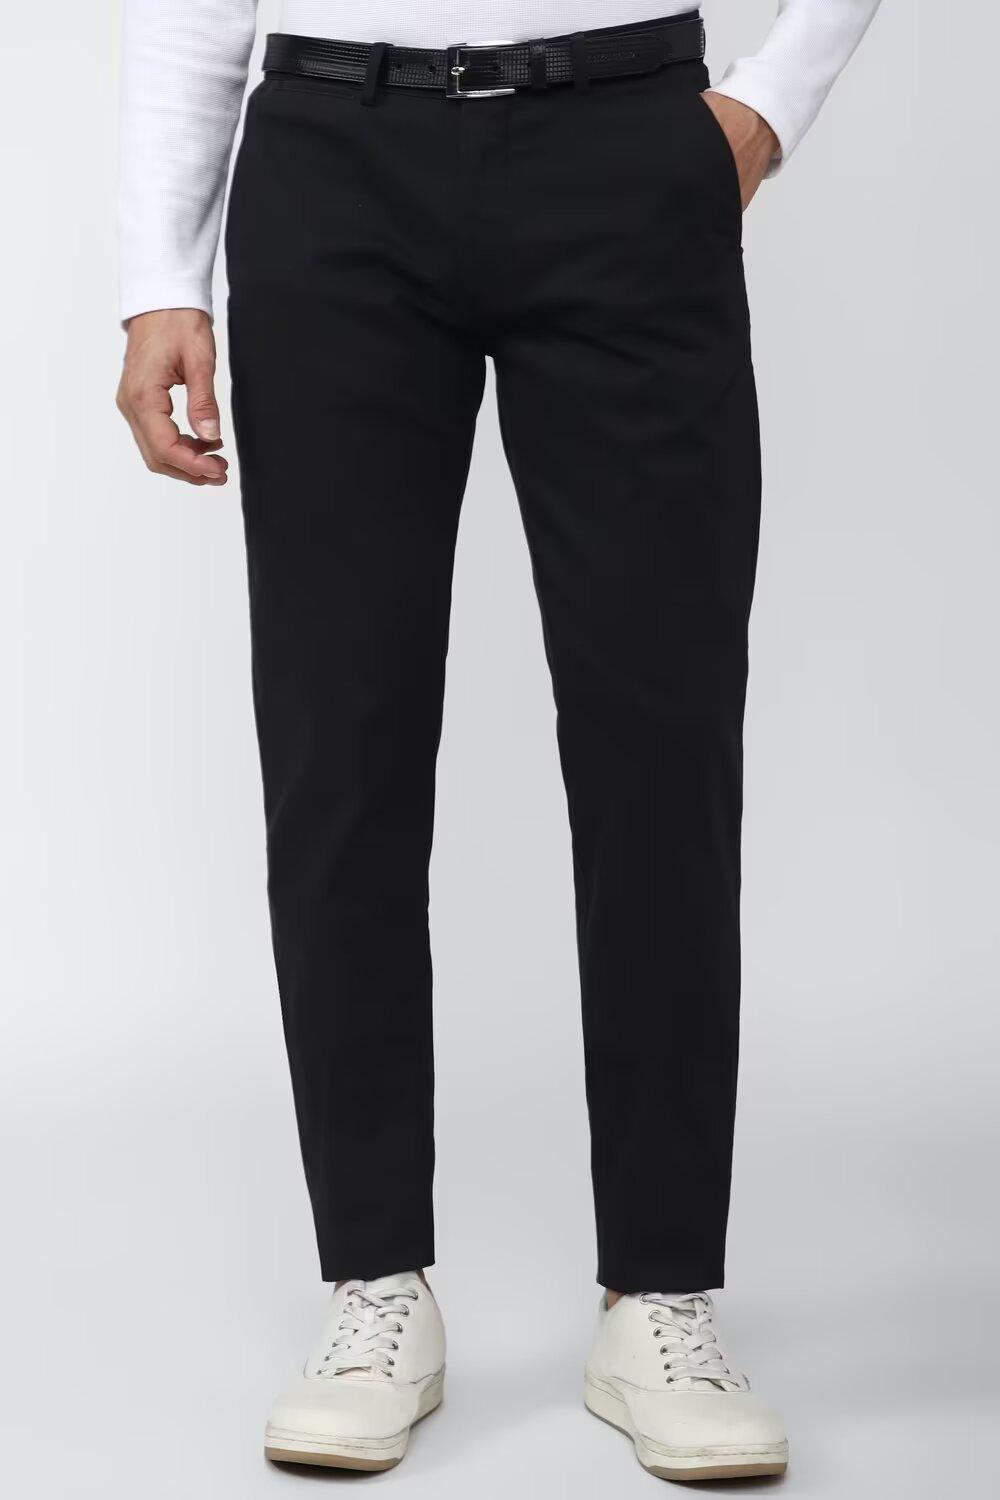 Buy Men Navy Check Slim Fit Formal Trousers Online - 623464 | Peter England